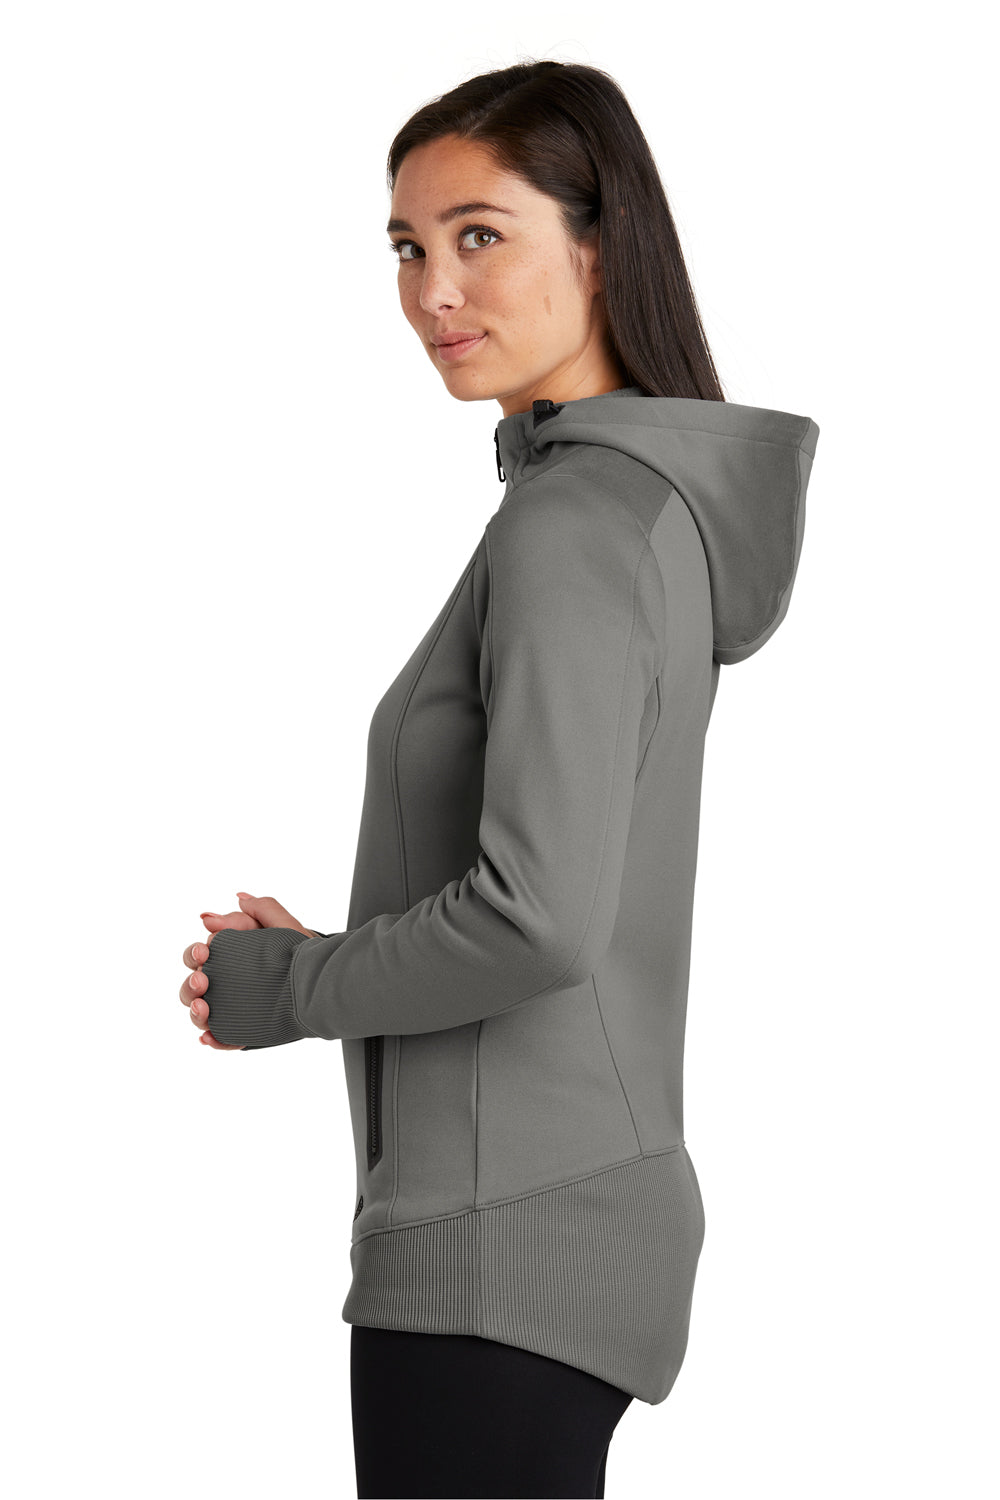 New Era LNEA522 Womens Venue Moisture Wicking Fleece Full Zip Hooded Sweatshirt Hoodie Shadow Grey Side